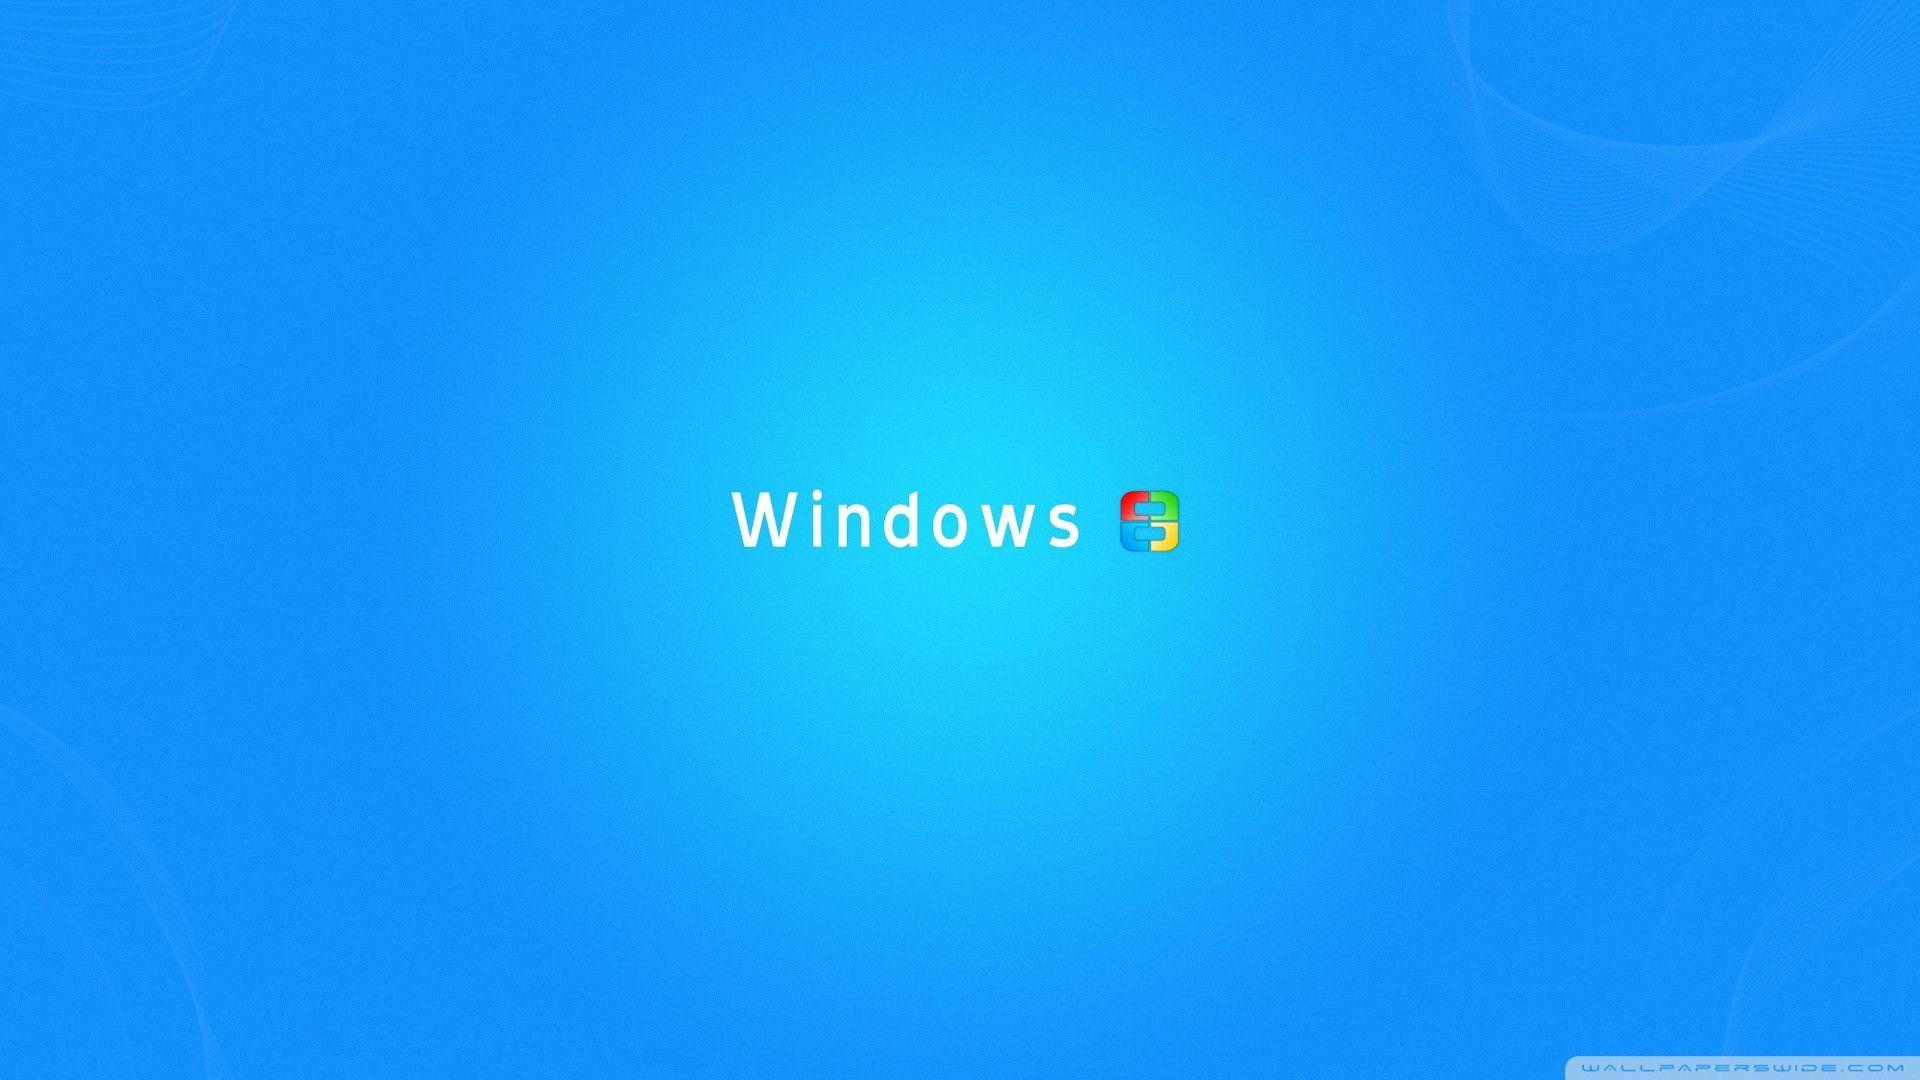 Windows 8 Wallpapers 1920x1080 - Wallpaper Cave